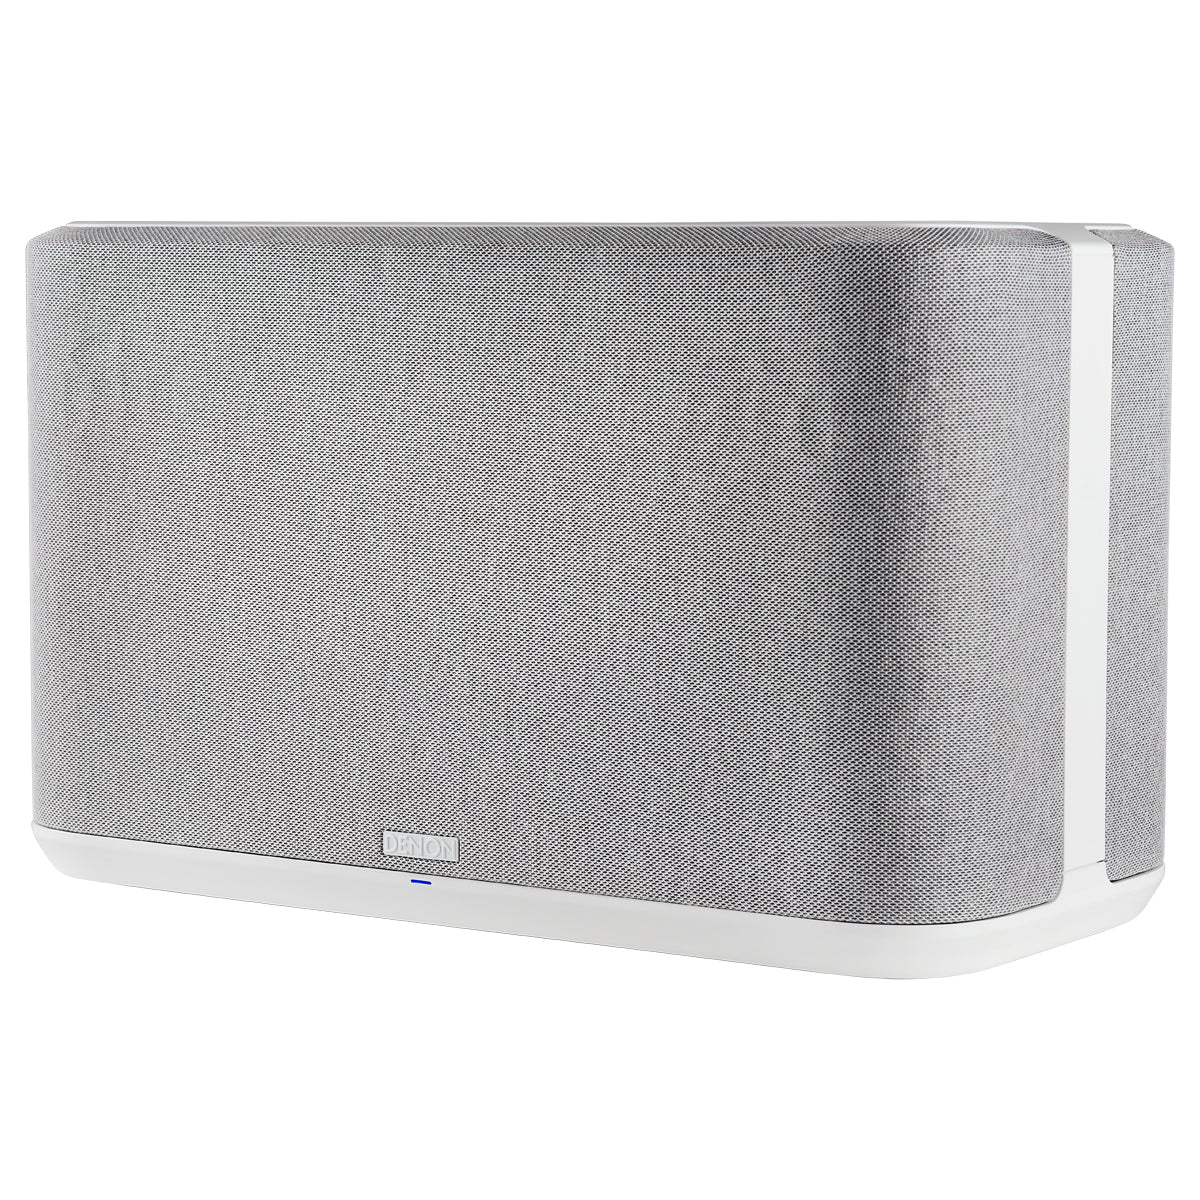 Denon Home 350 Wireless Speaker - White - The Audio Experts